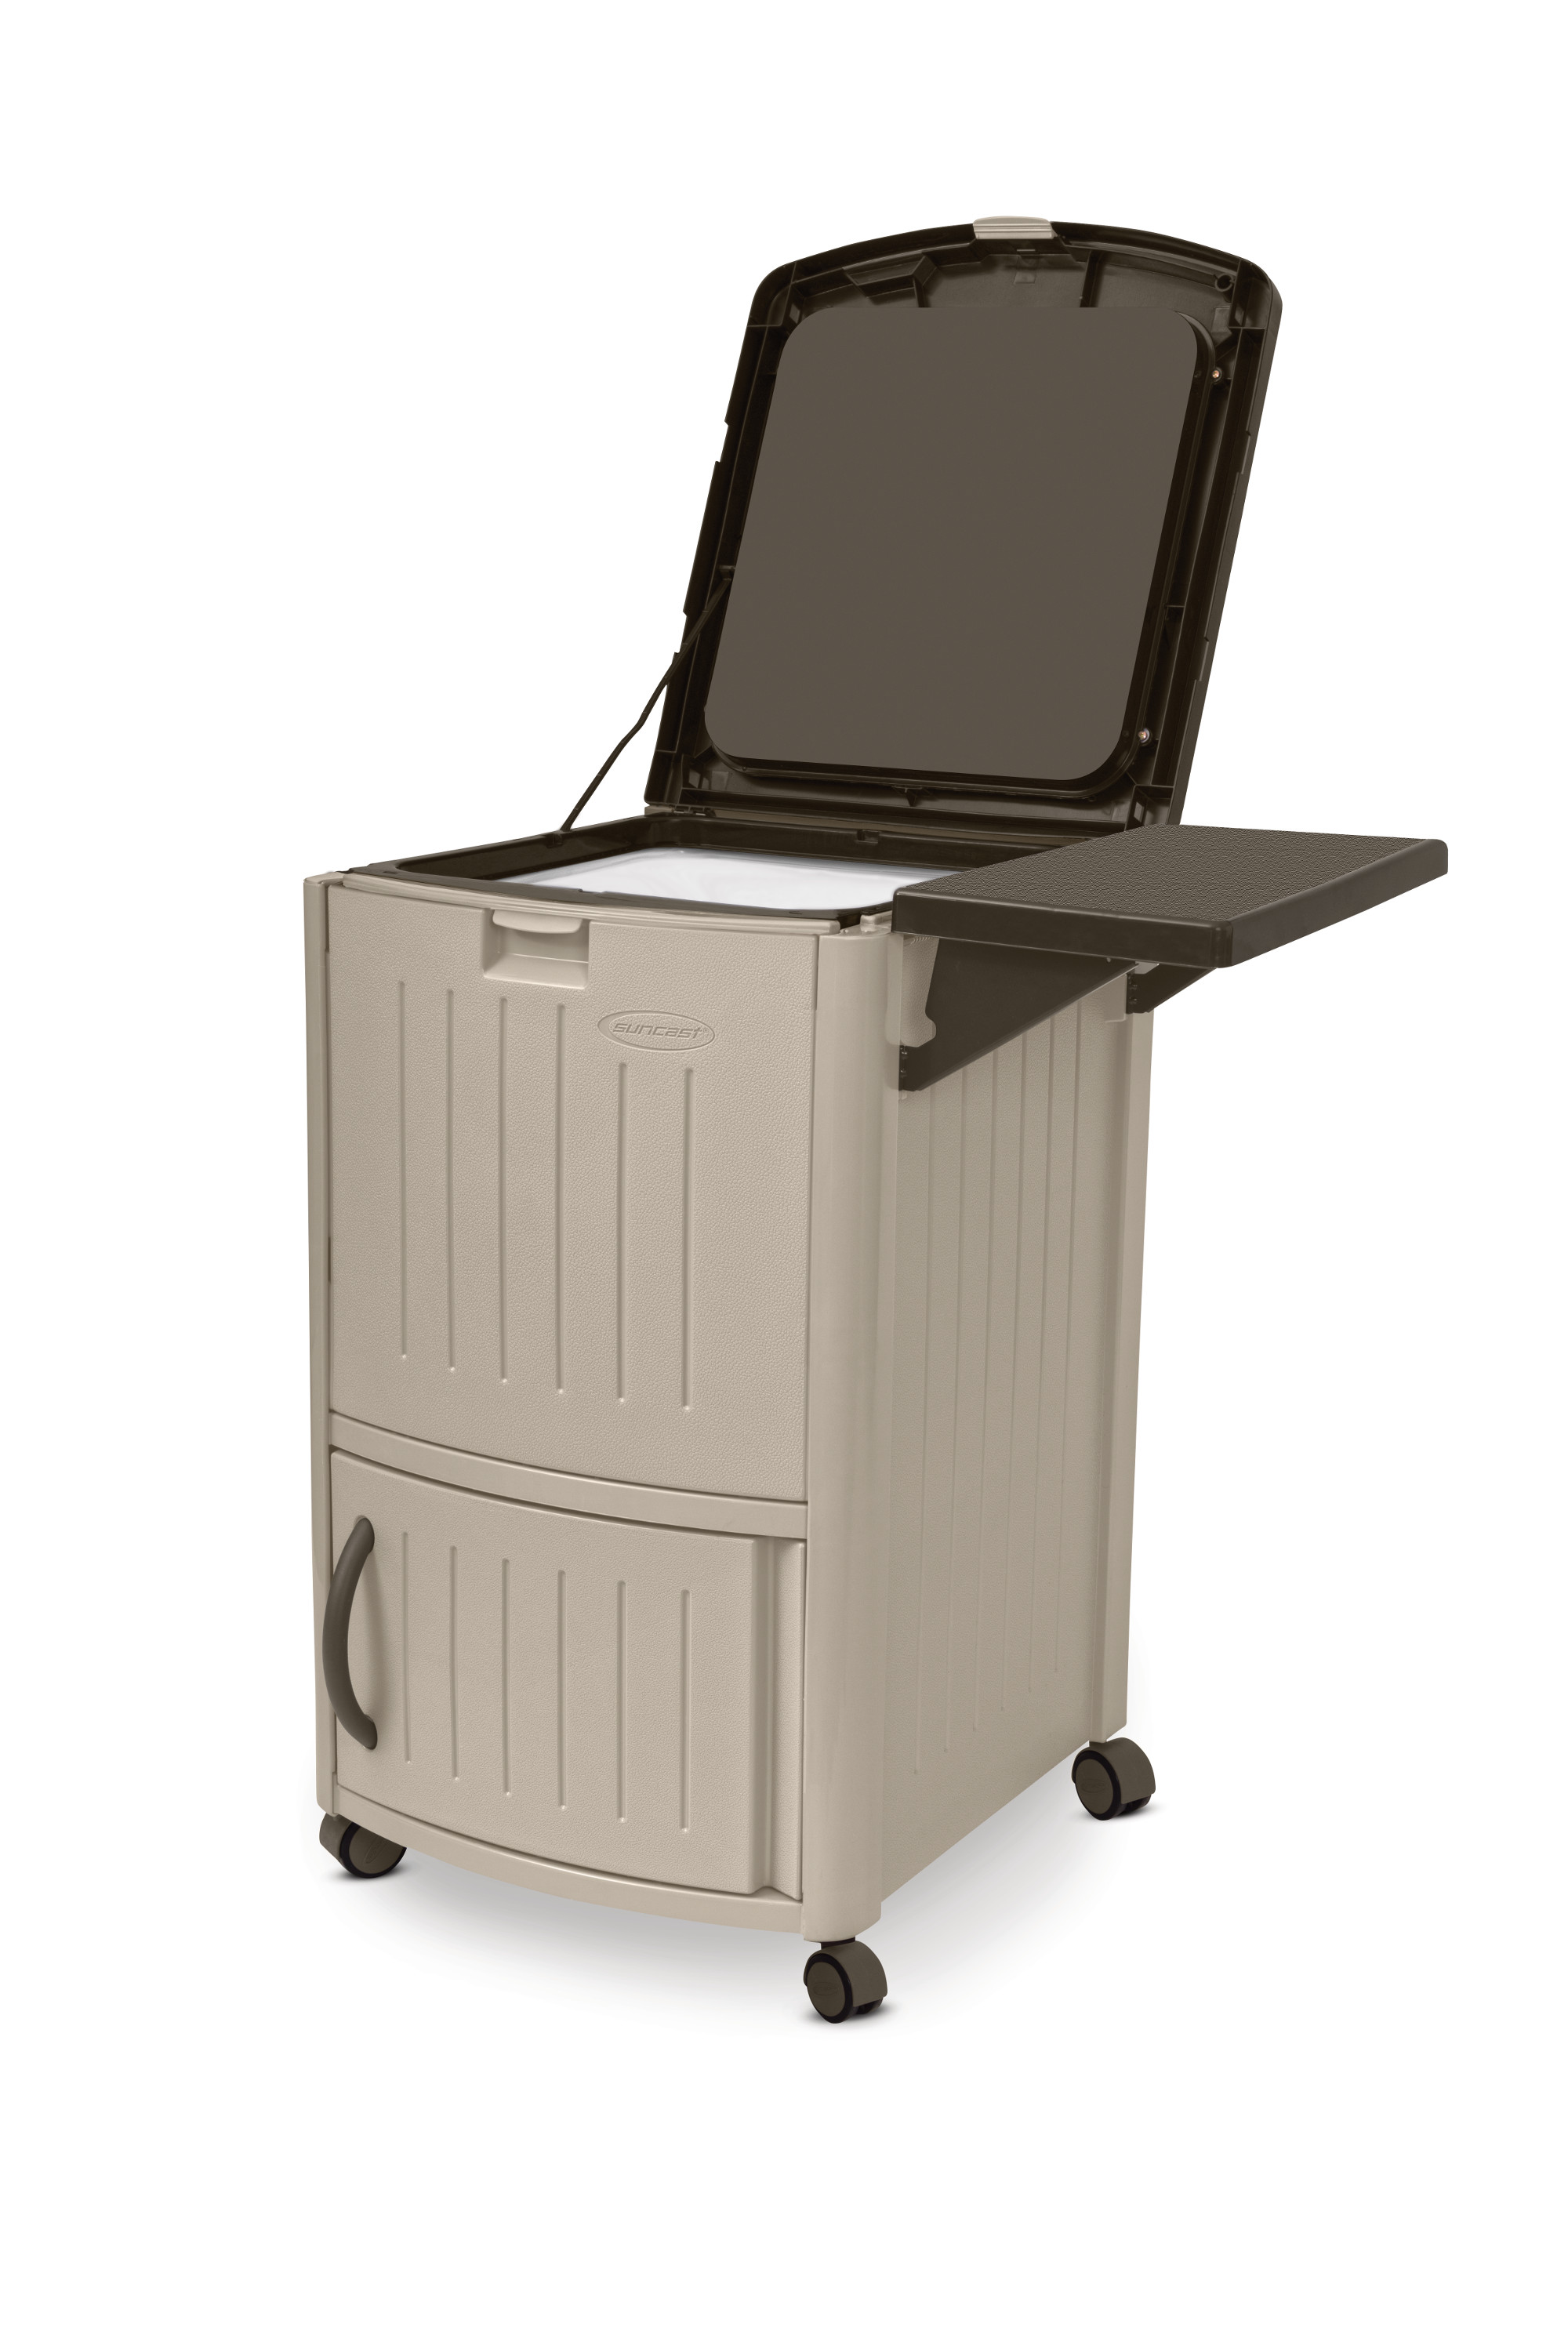 Suncast Patio Cooler Cart with Cabinet, 77 Quart, Light Taupe, DCC3000 - image 5 of 5